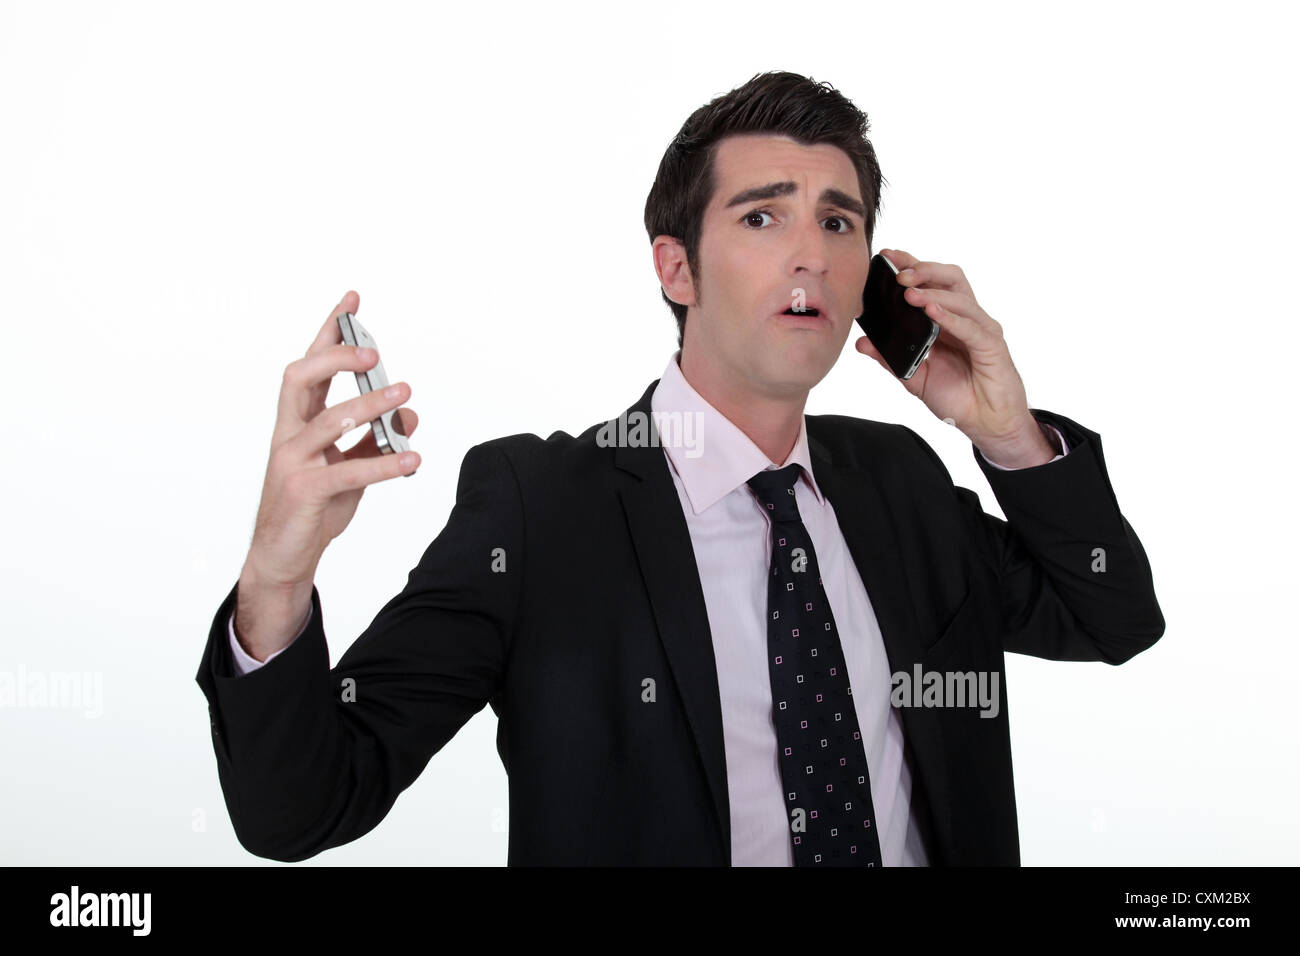 Overwhelmed businessman answering telephones Stock Photo